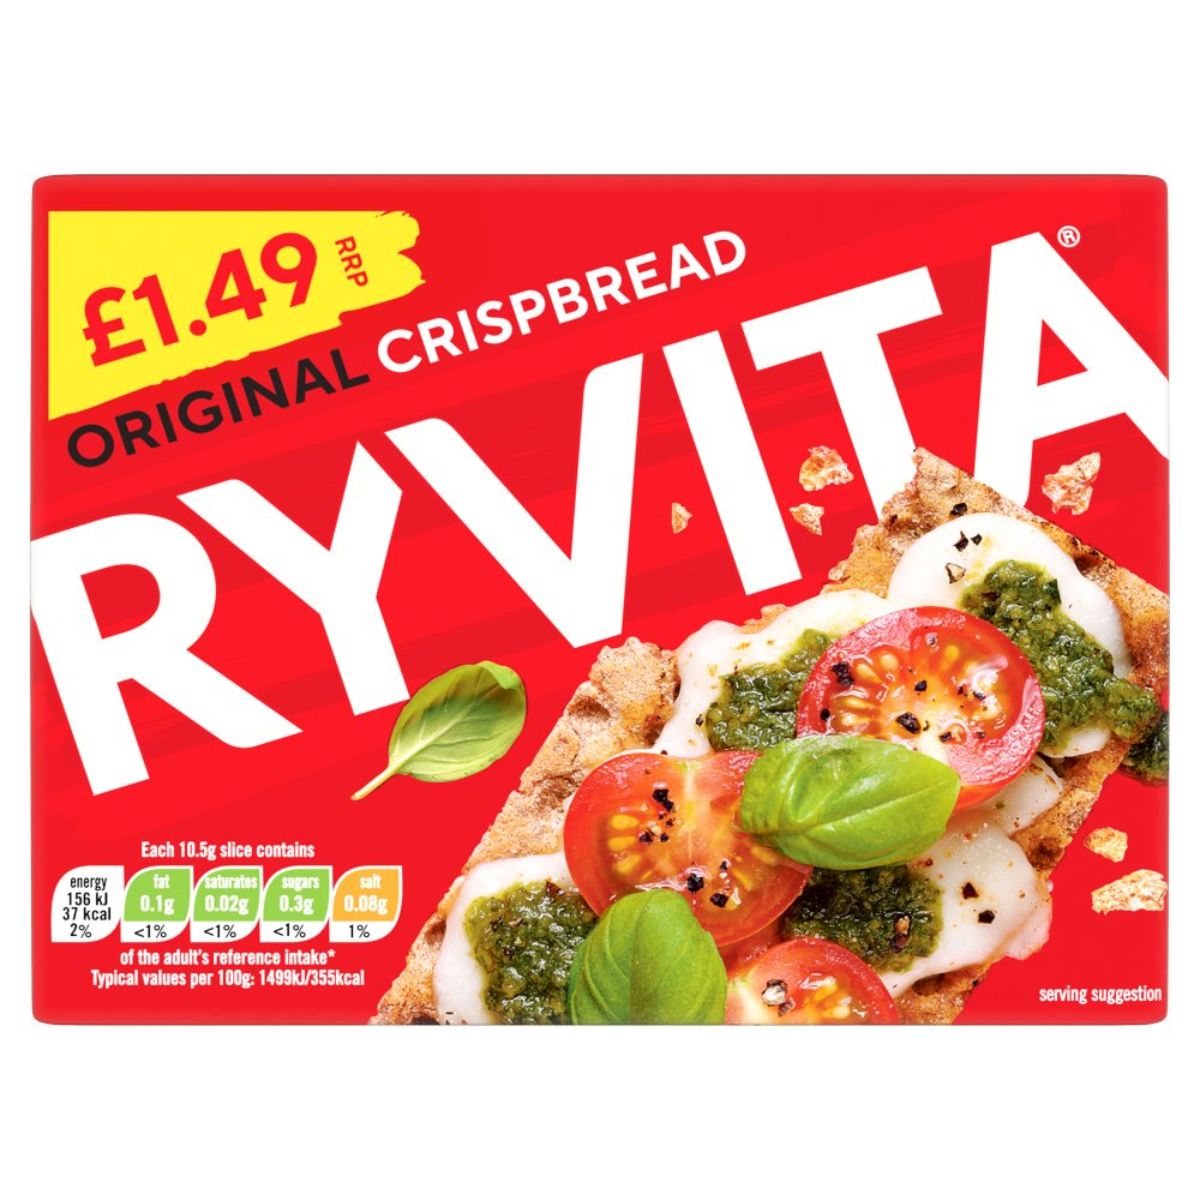 A box of Ryvita - Original Crispbread - 200g with tomatoes and basil.